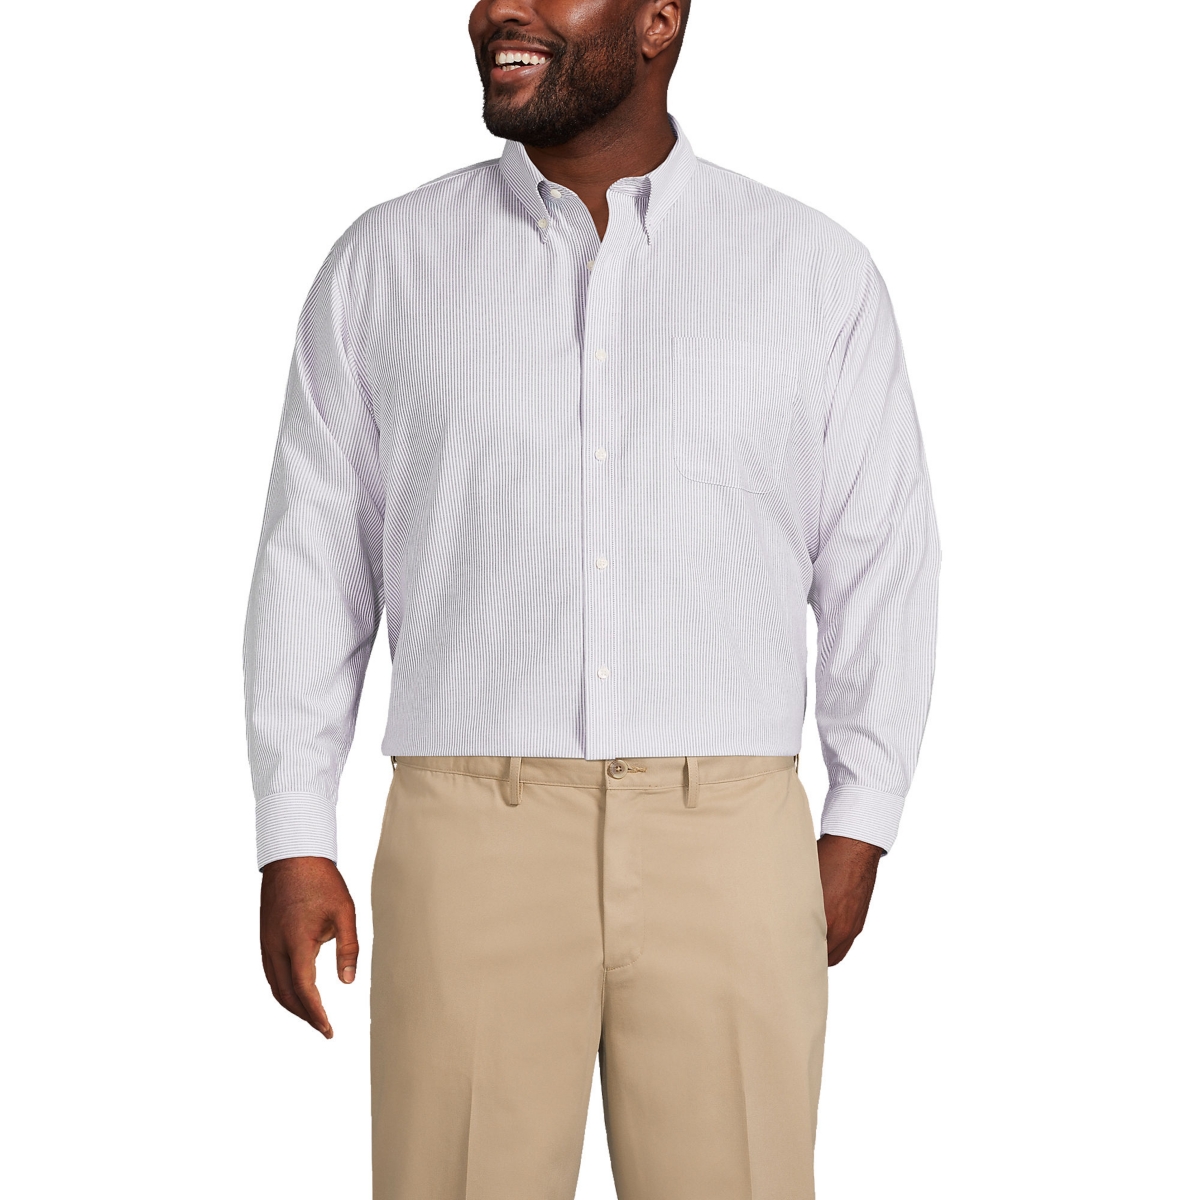 Men's Traditional Fit Pattern No Iron Supima Oxford Dress Shirt - Deep sea navy stripe